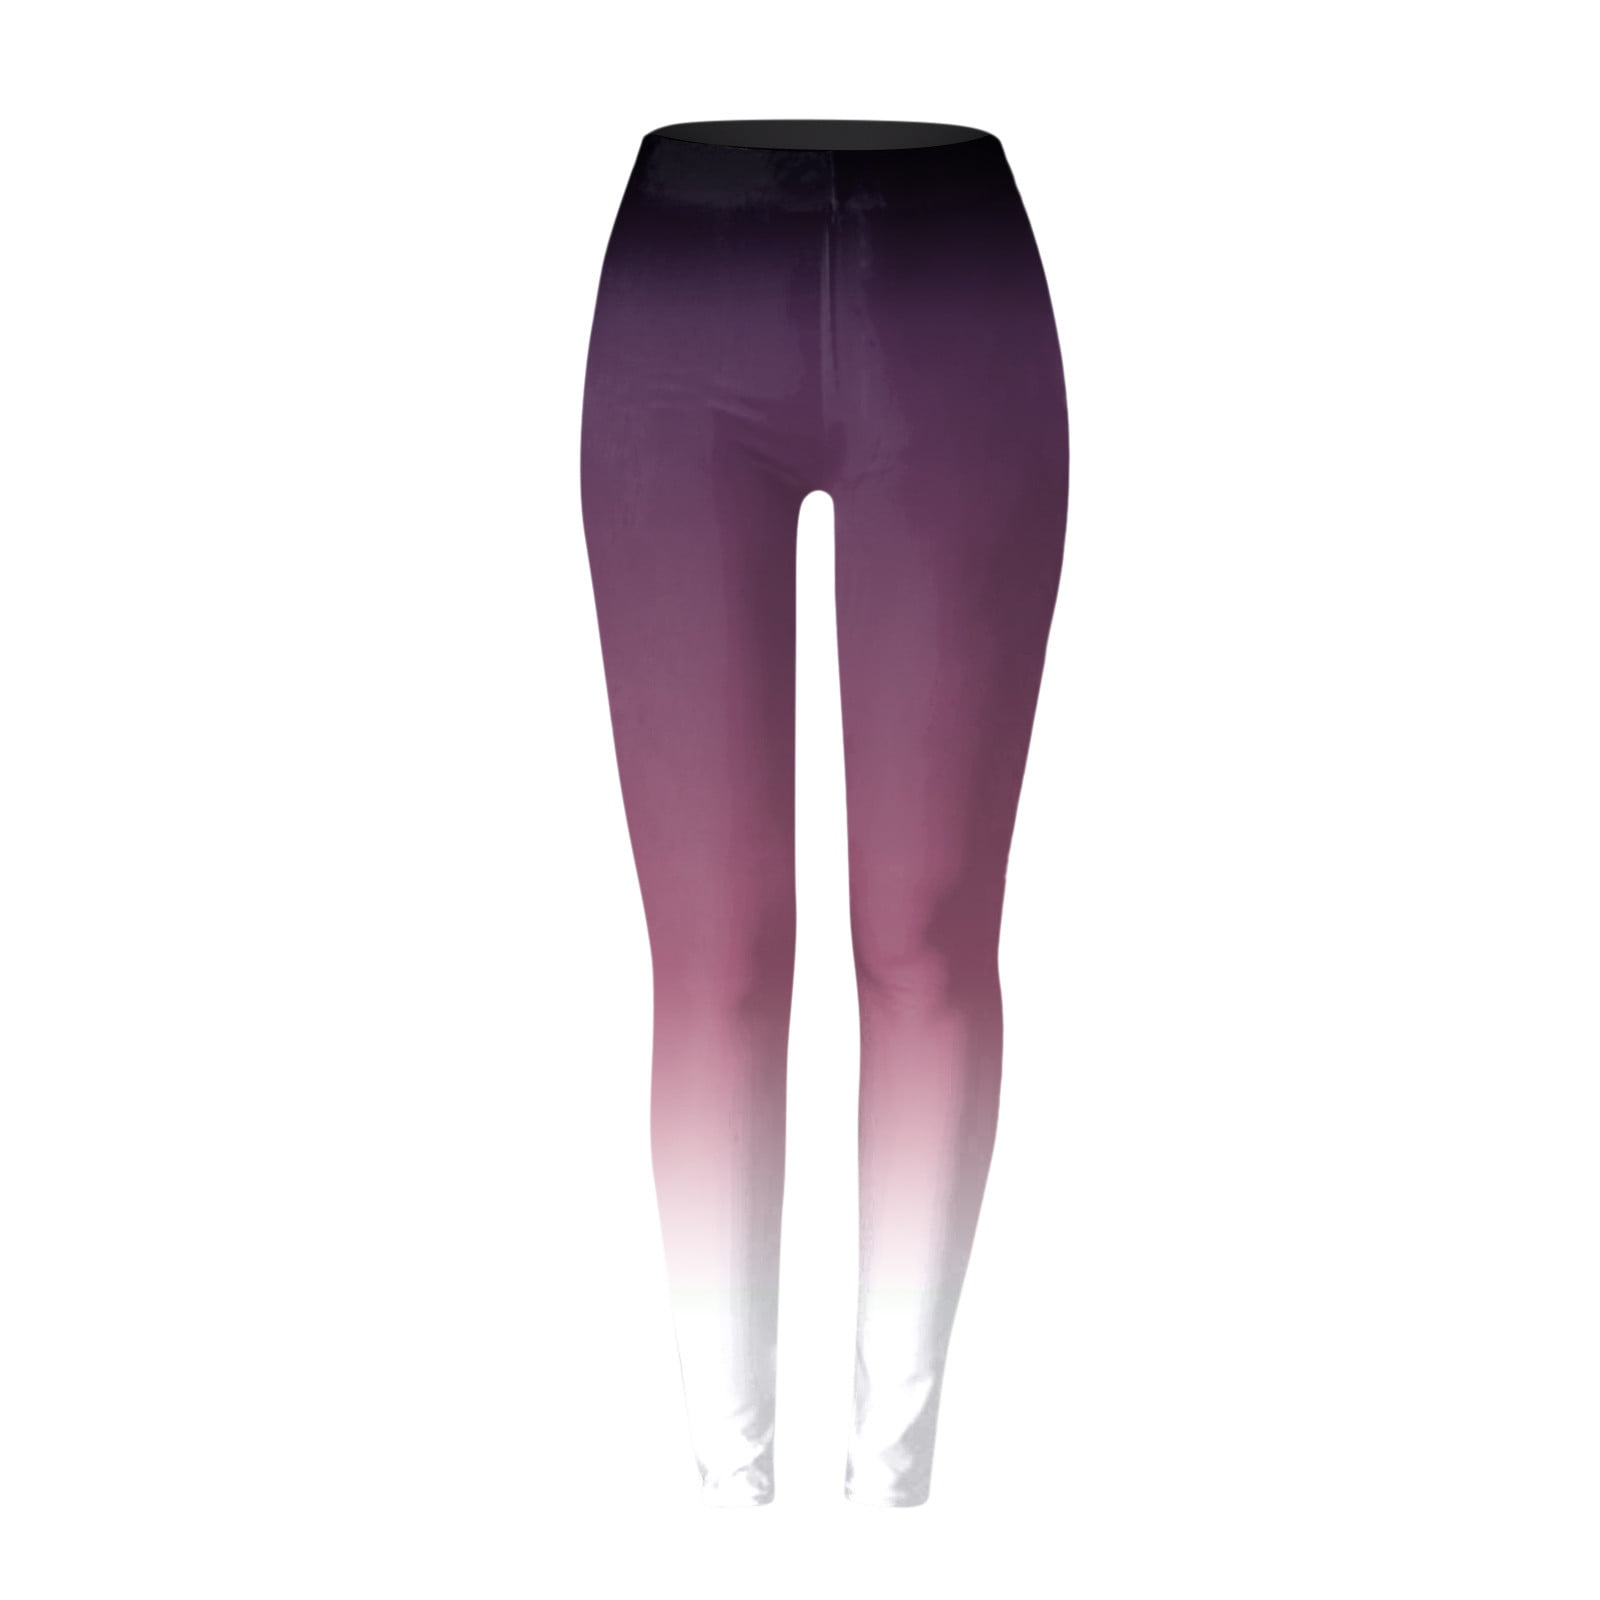 kpoplk Cross Over Leggings,Seamless Scrunch Lifting Leggings High Waisted  Yoga Pants for Women, Workout Tight(Purple,XL) 